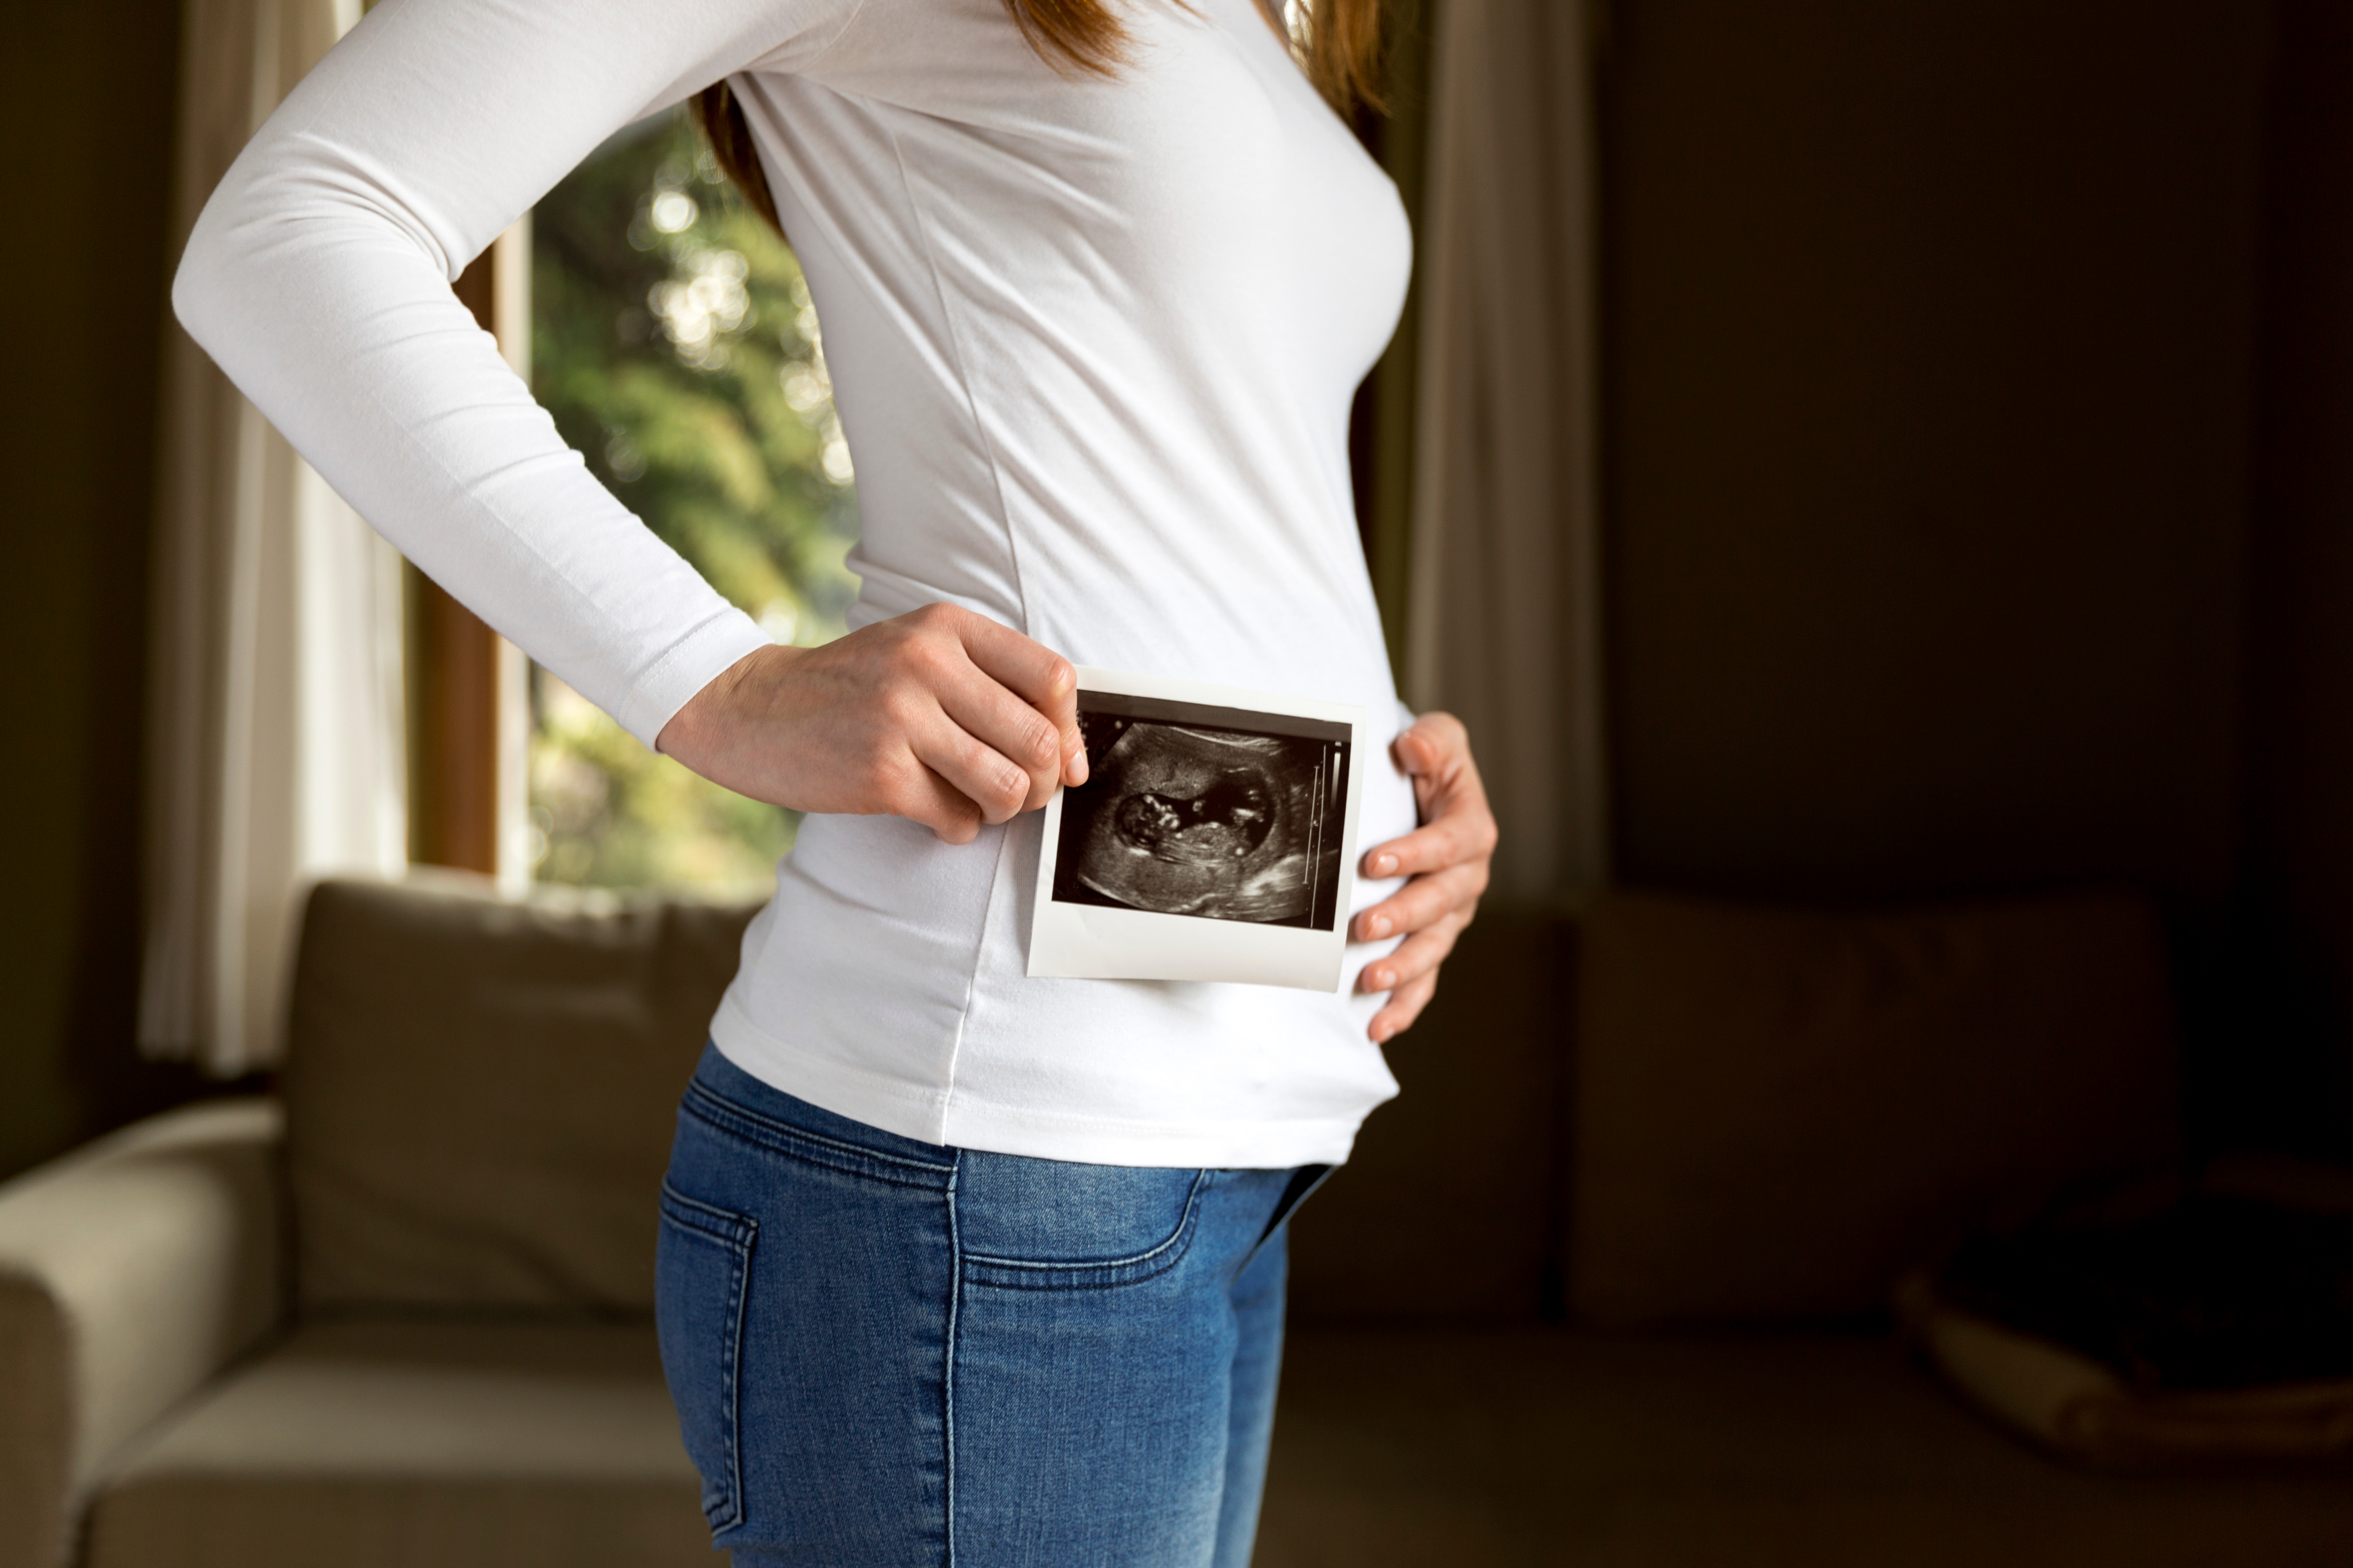 A pregnant woman holding an ultrasound | Source: Shutterstock